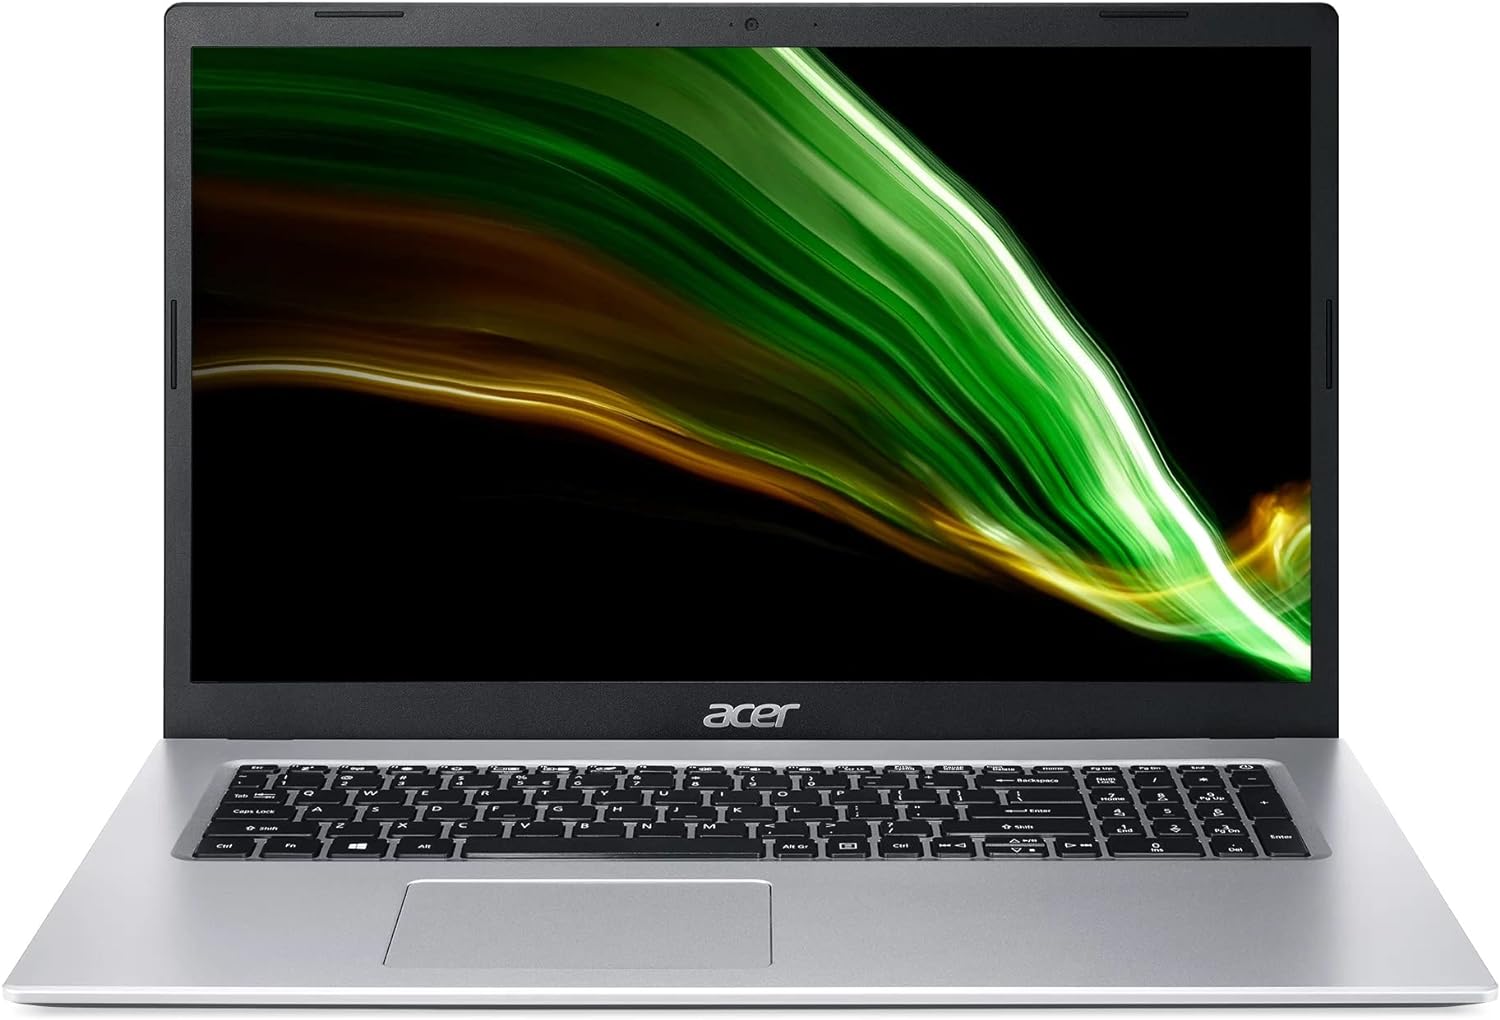 Comparing 5 Laptops: Acer Aspire 1, HP Stream, HP Portable, Acer Aspire 5, Lenovo Ideapad